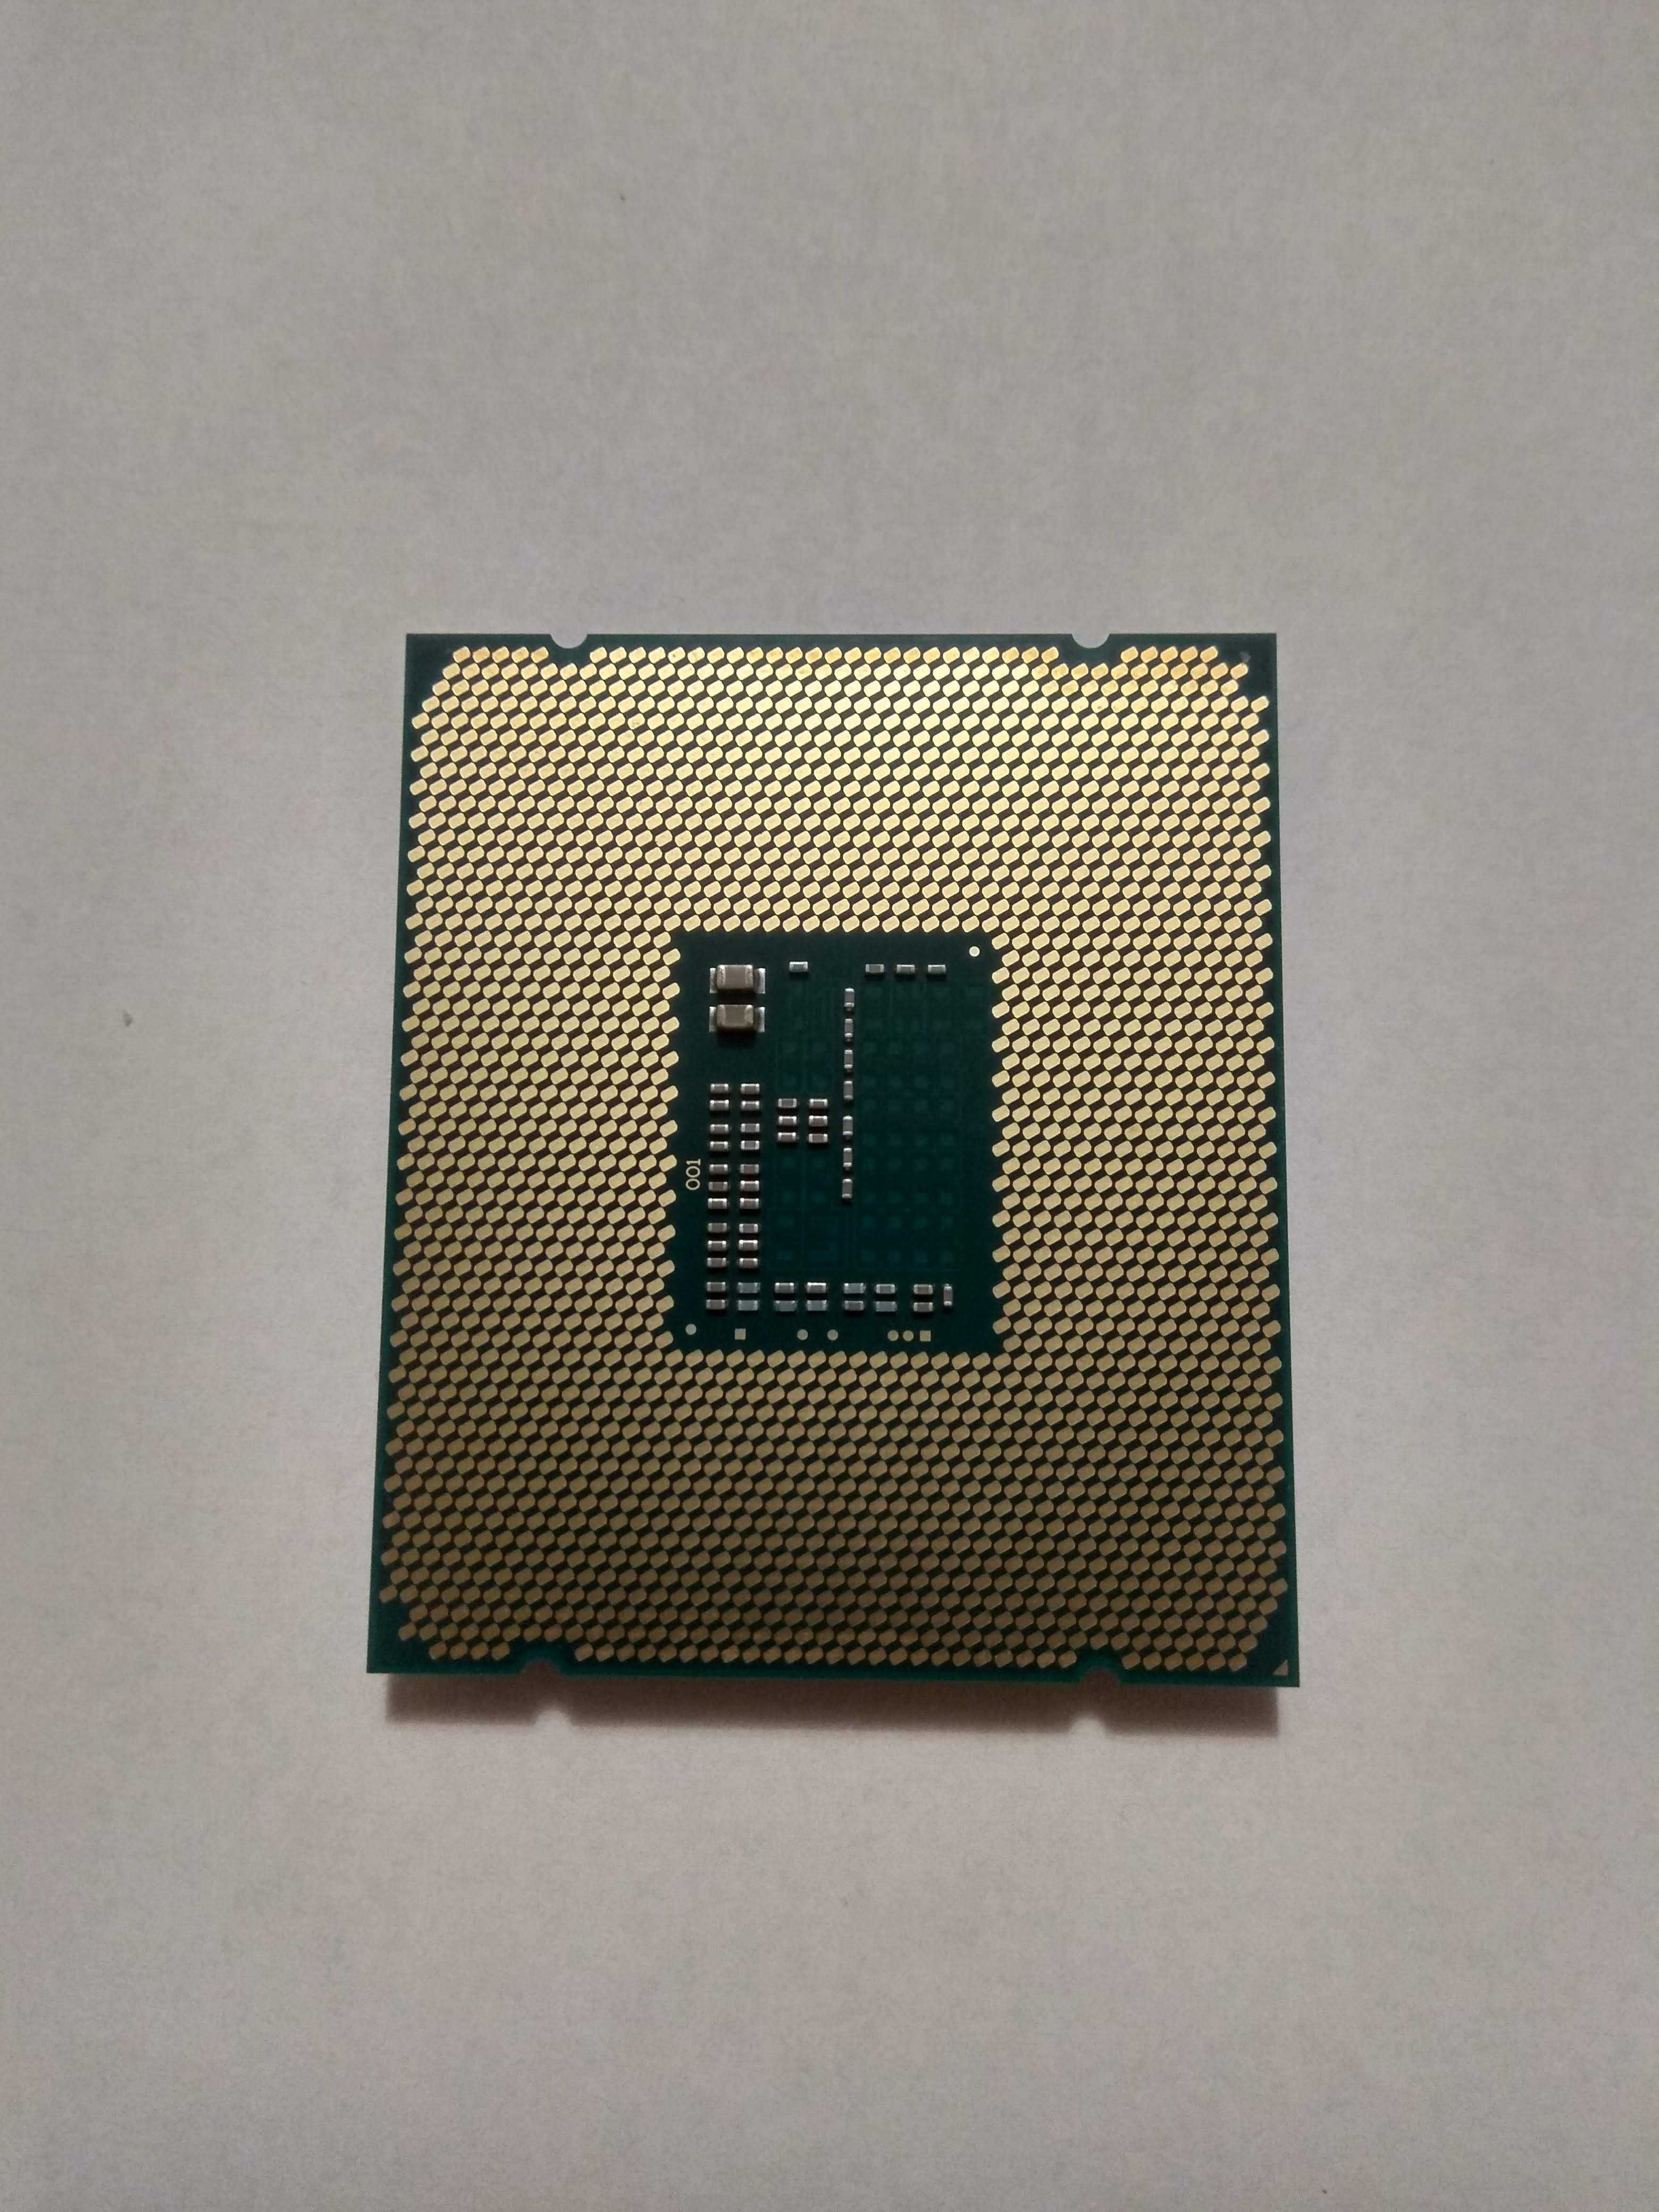 Продам процессор Intel Xeon E5-1650V3 SR20J 6 ядер.